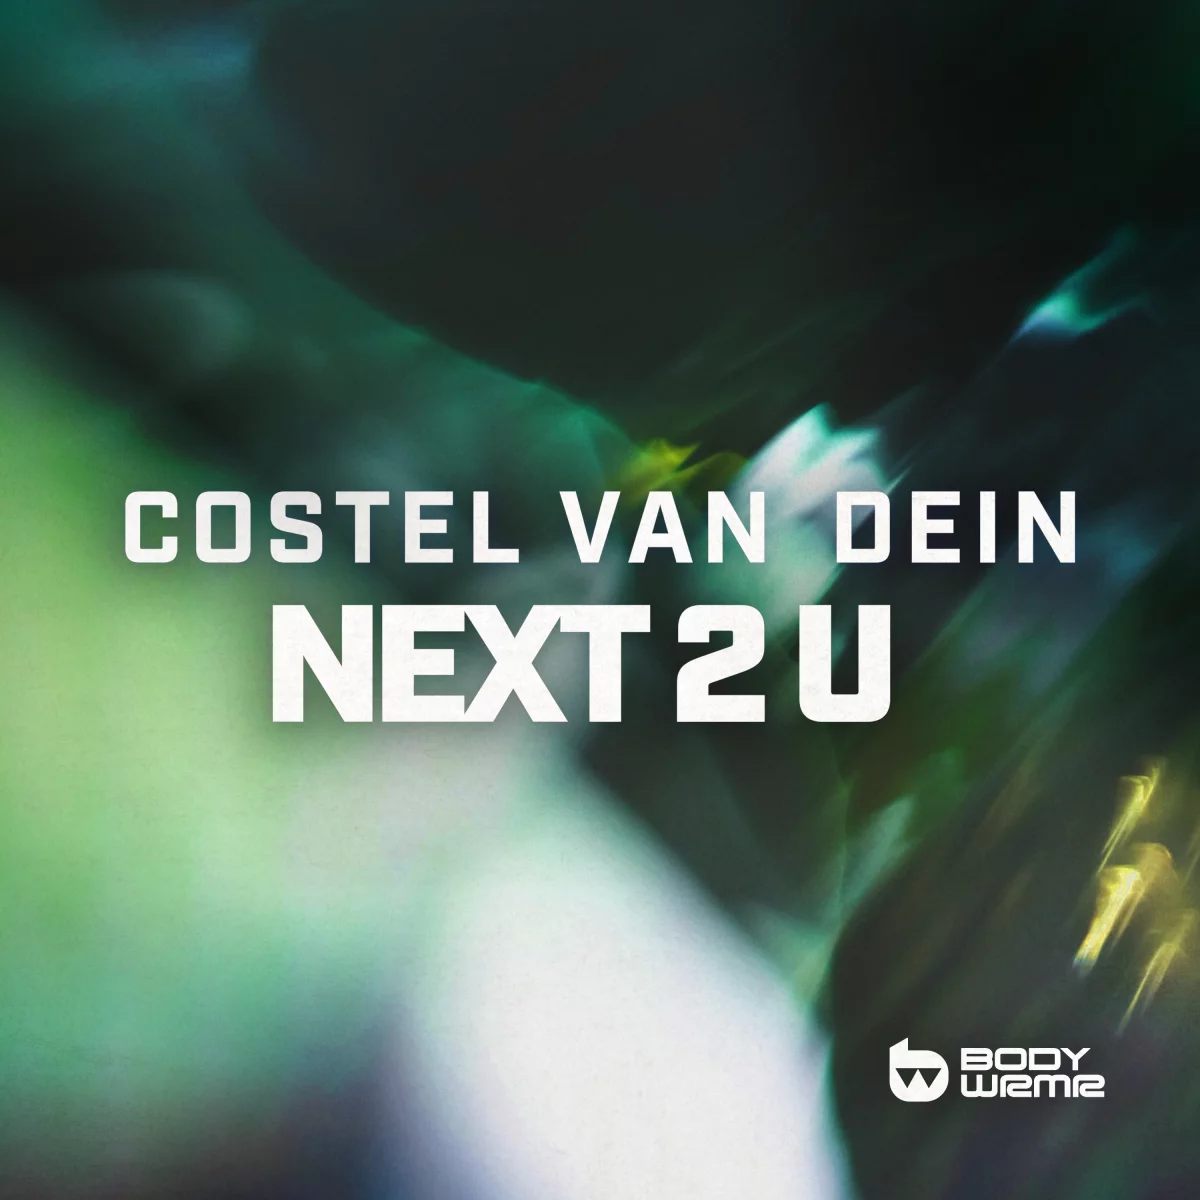 Next 2 U - Costel van Dein⁠ 